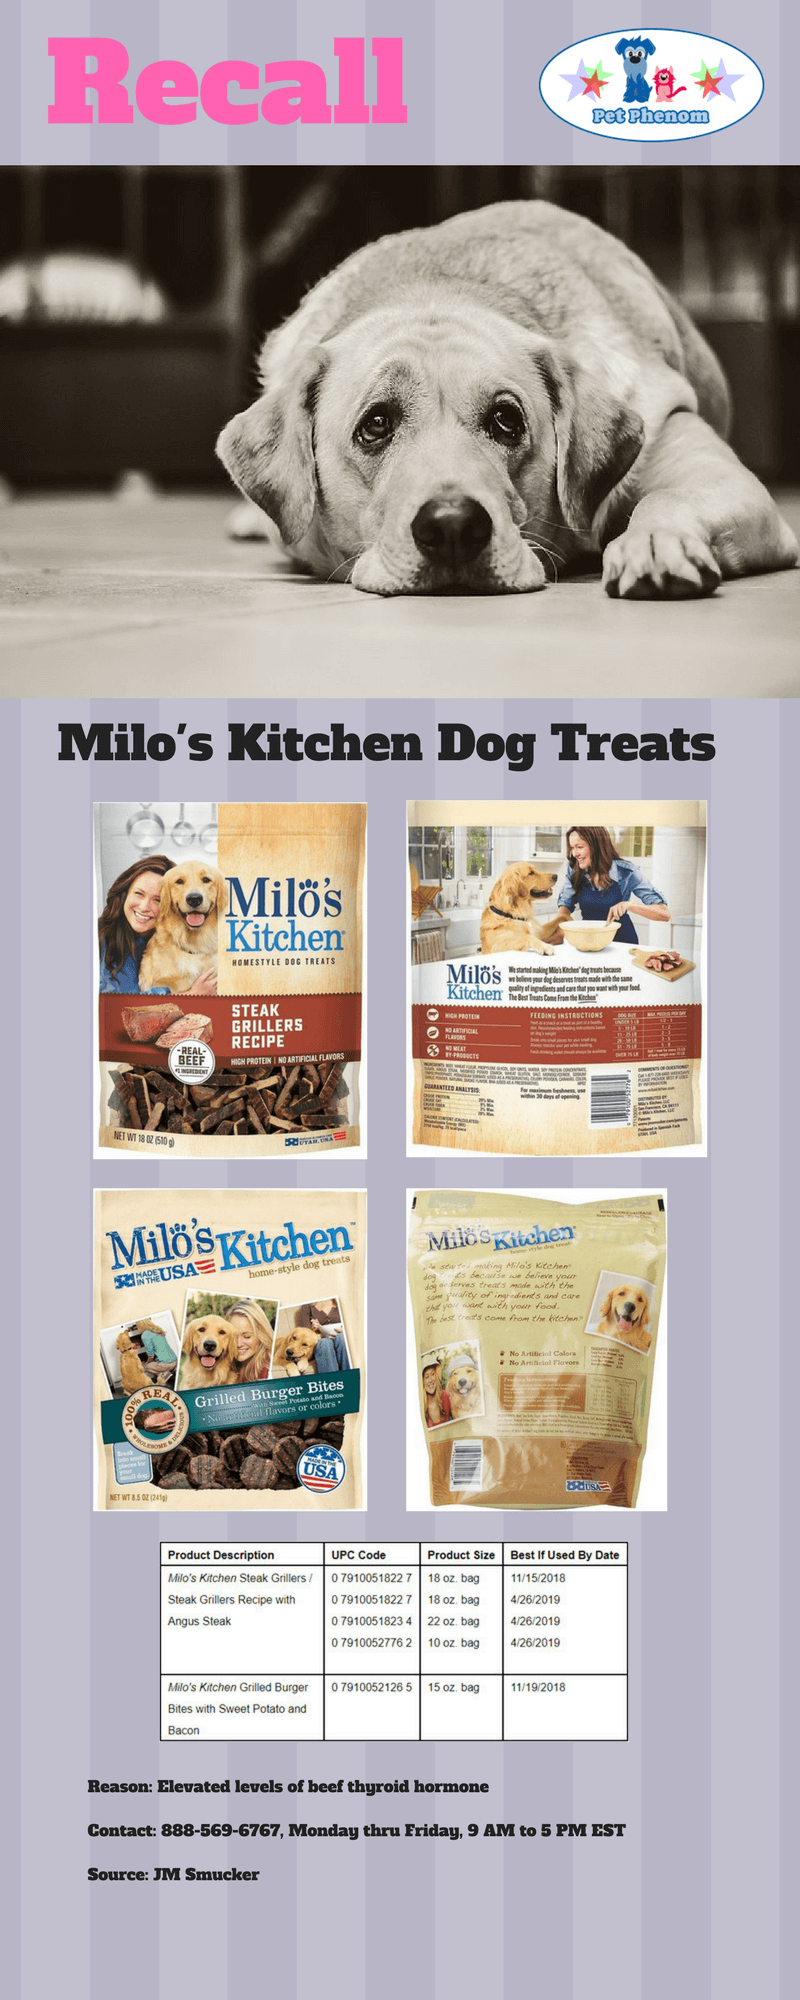 Milo's Kitchen Dog Treats Recall